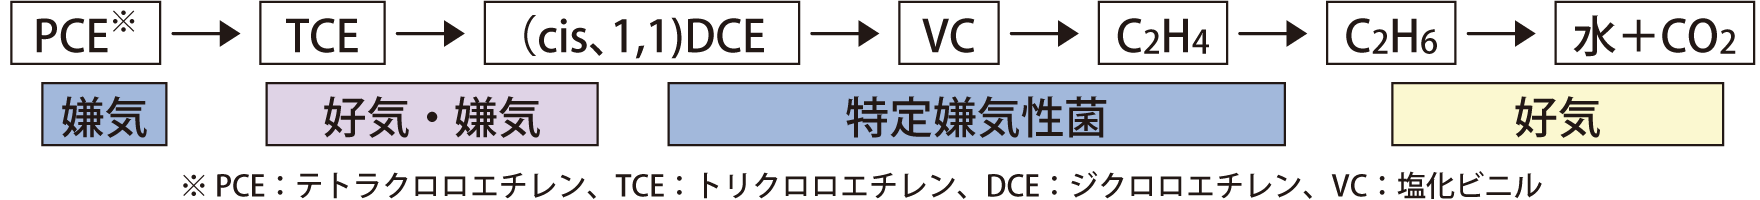 VOC分解系列の例